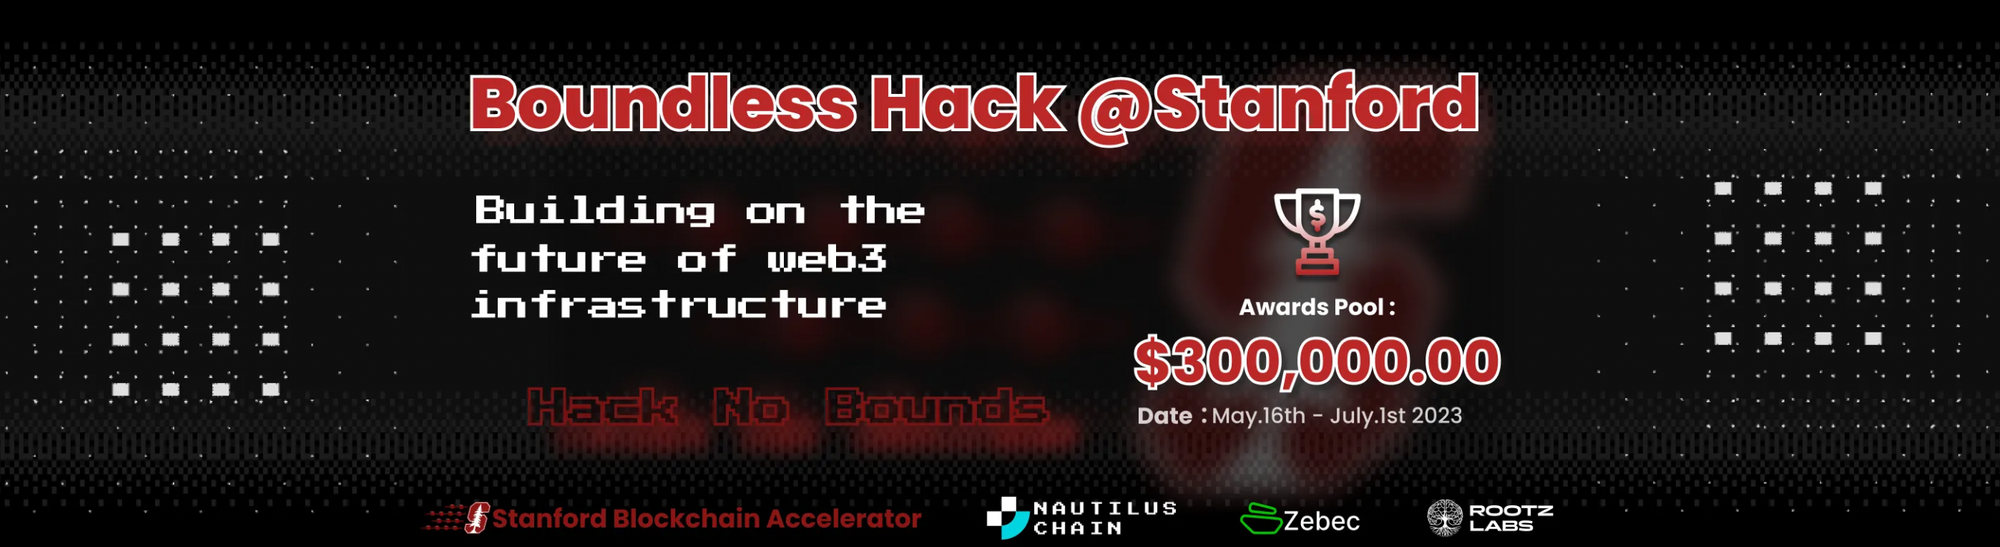 Boundless Hackathon @Stanford Recap & Result Announcement